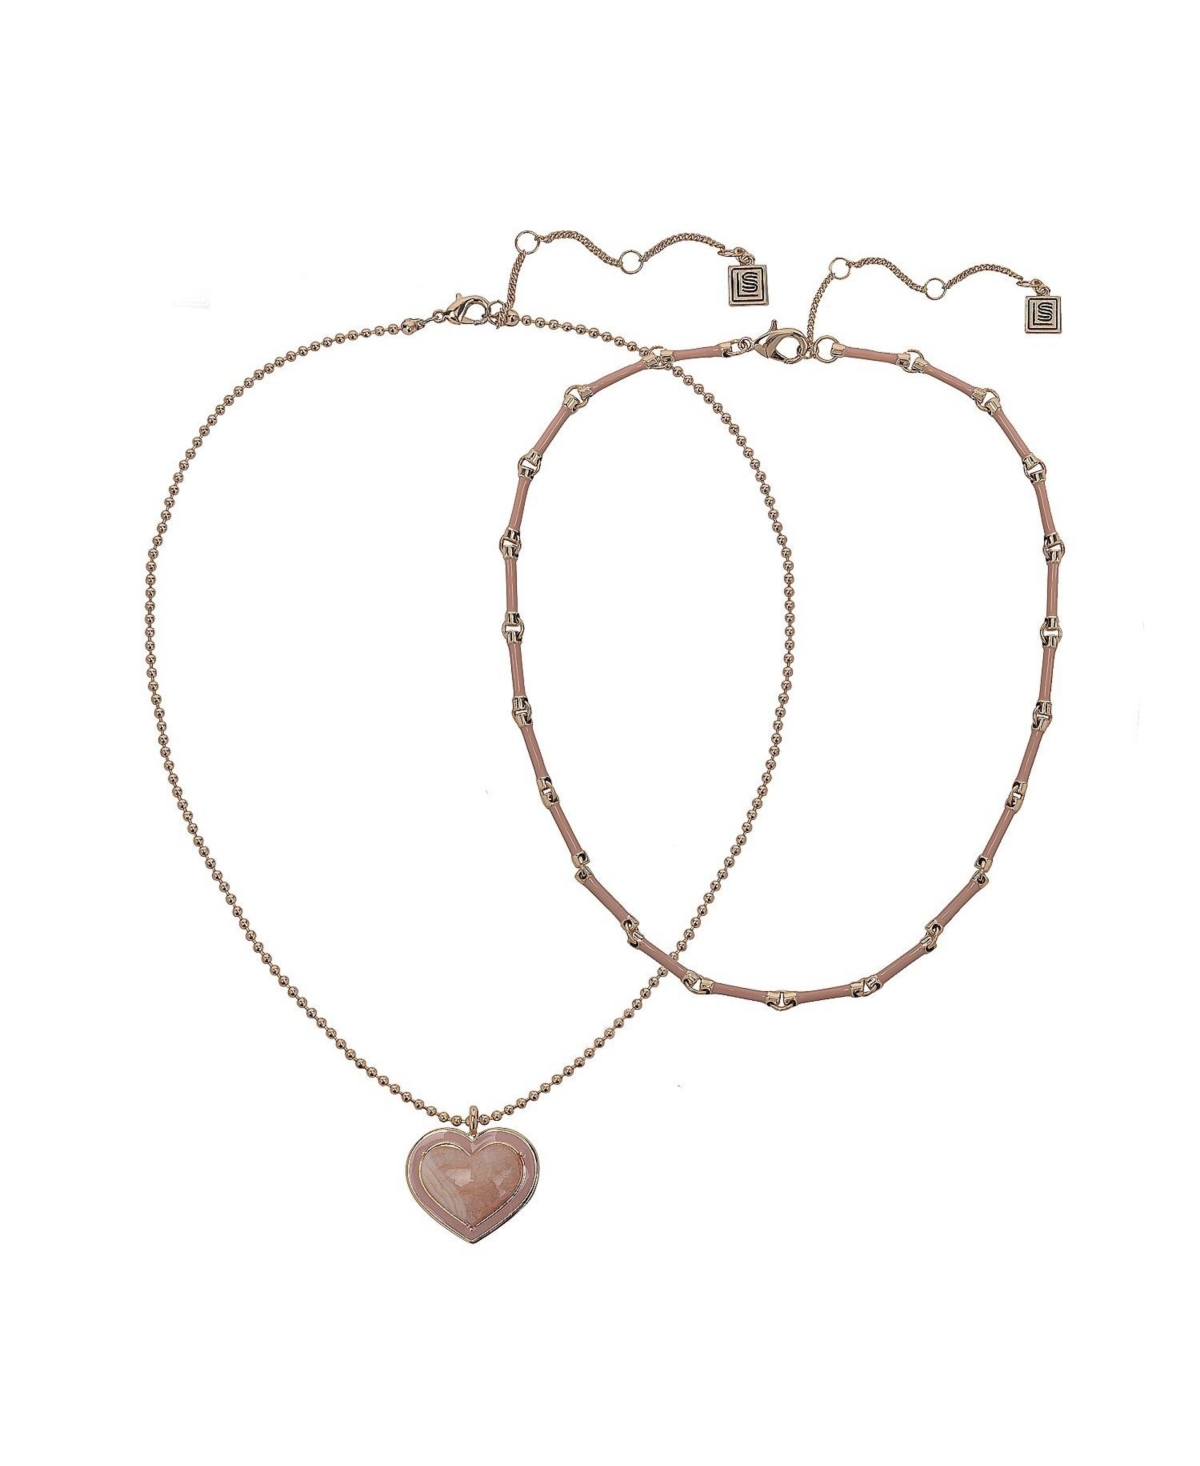 2 Piece Heart Necklace Set - Gold